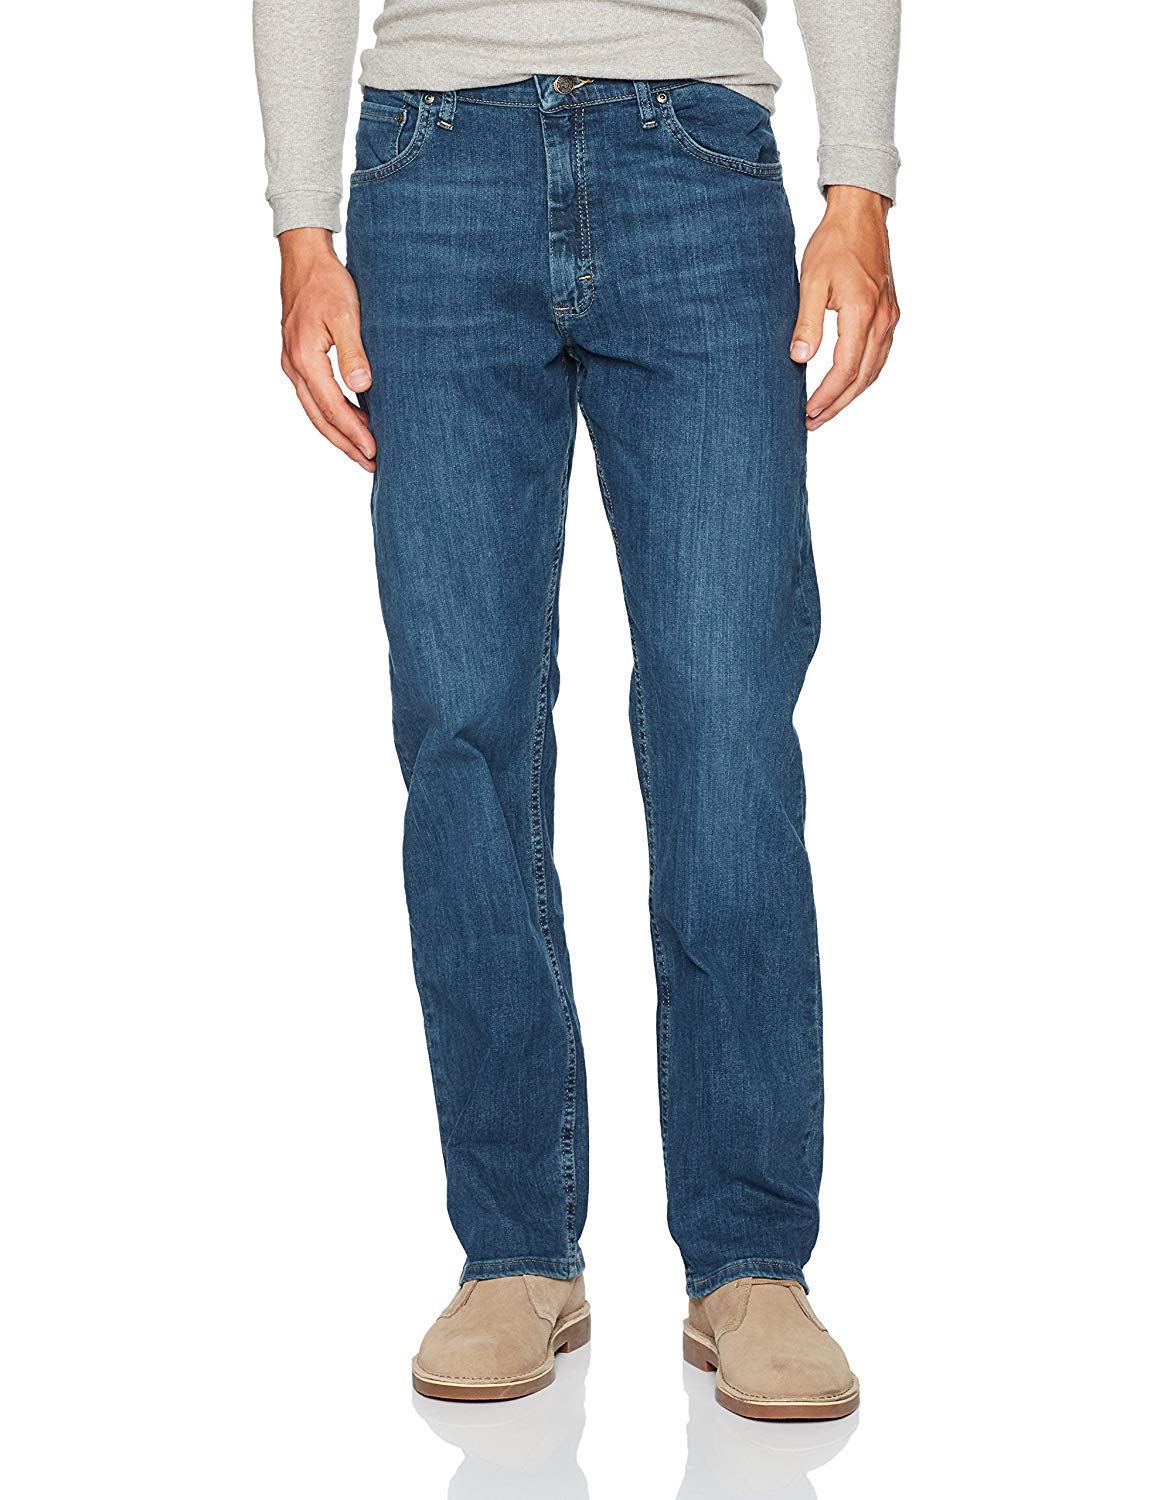 Wrangler Authentics Men's Classic 5-Pocket Relaxed Fit Jean, Slate Flex, 34W x 29L